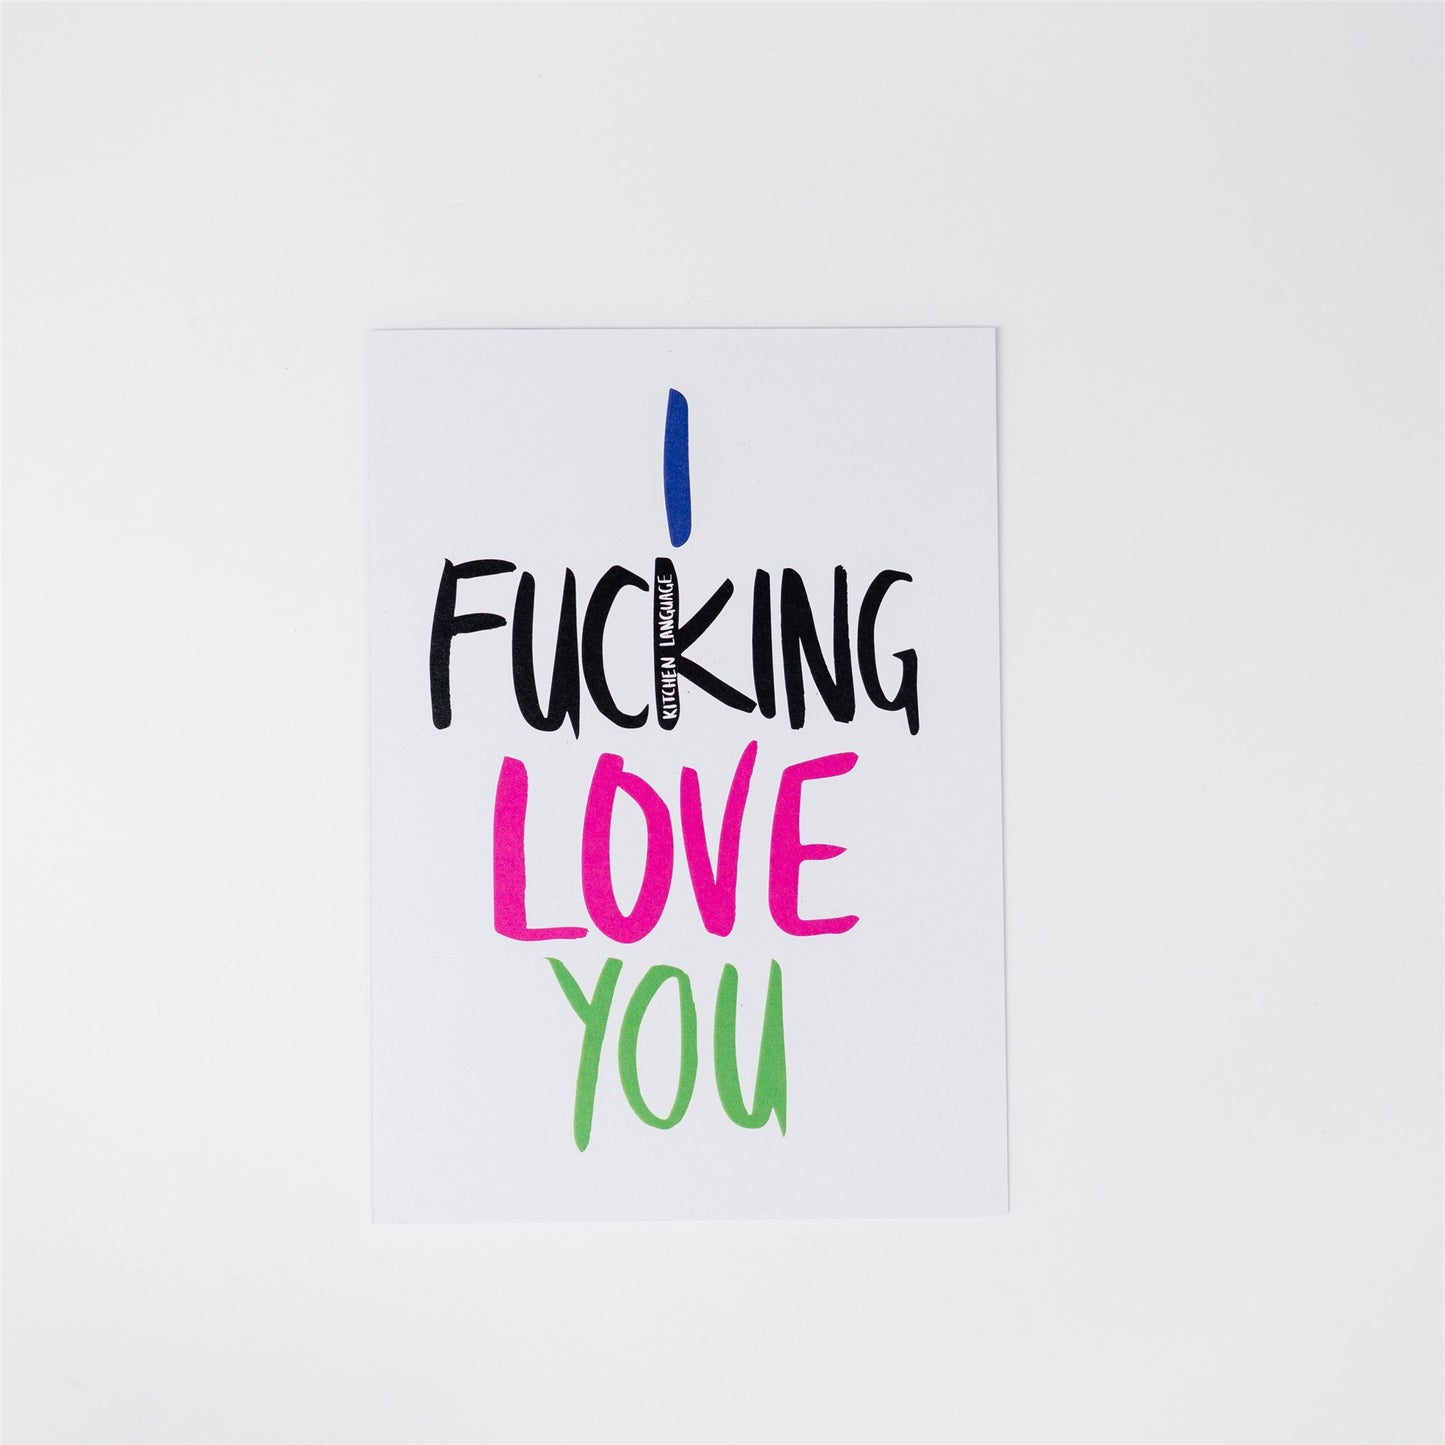 I fucking Love You - greeting card- kitchen language